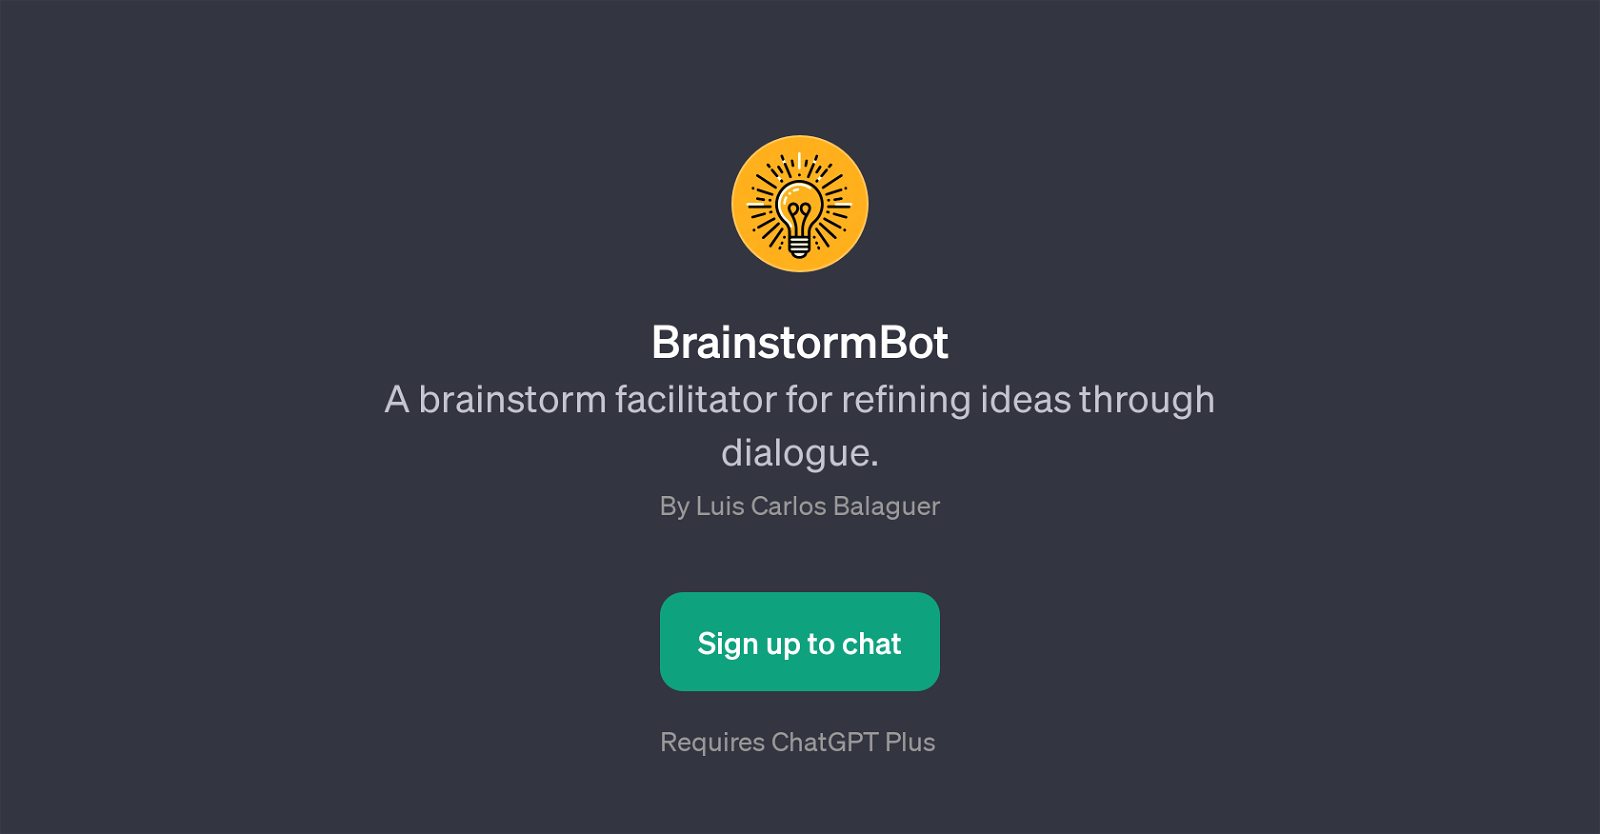 BrainstormBot website